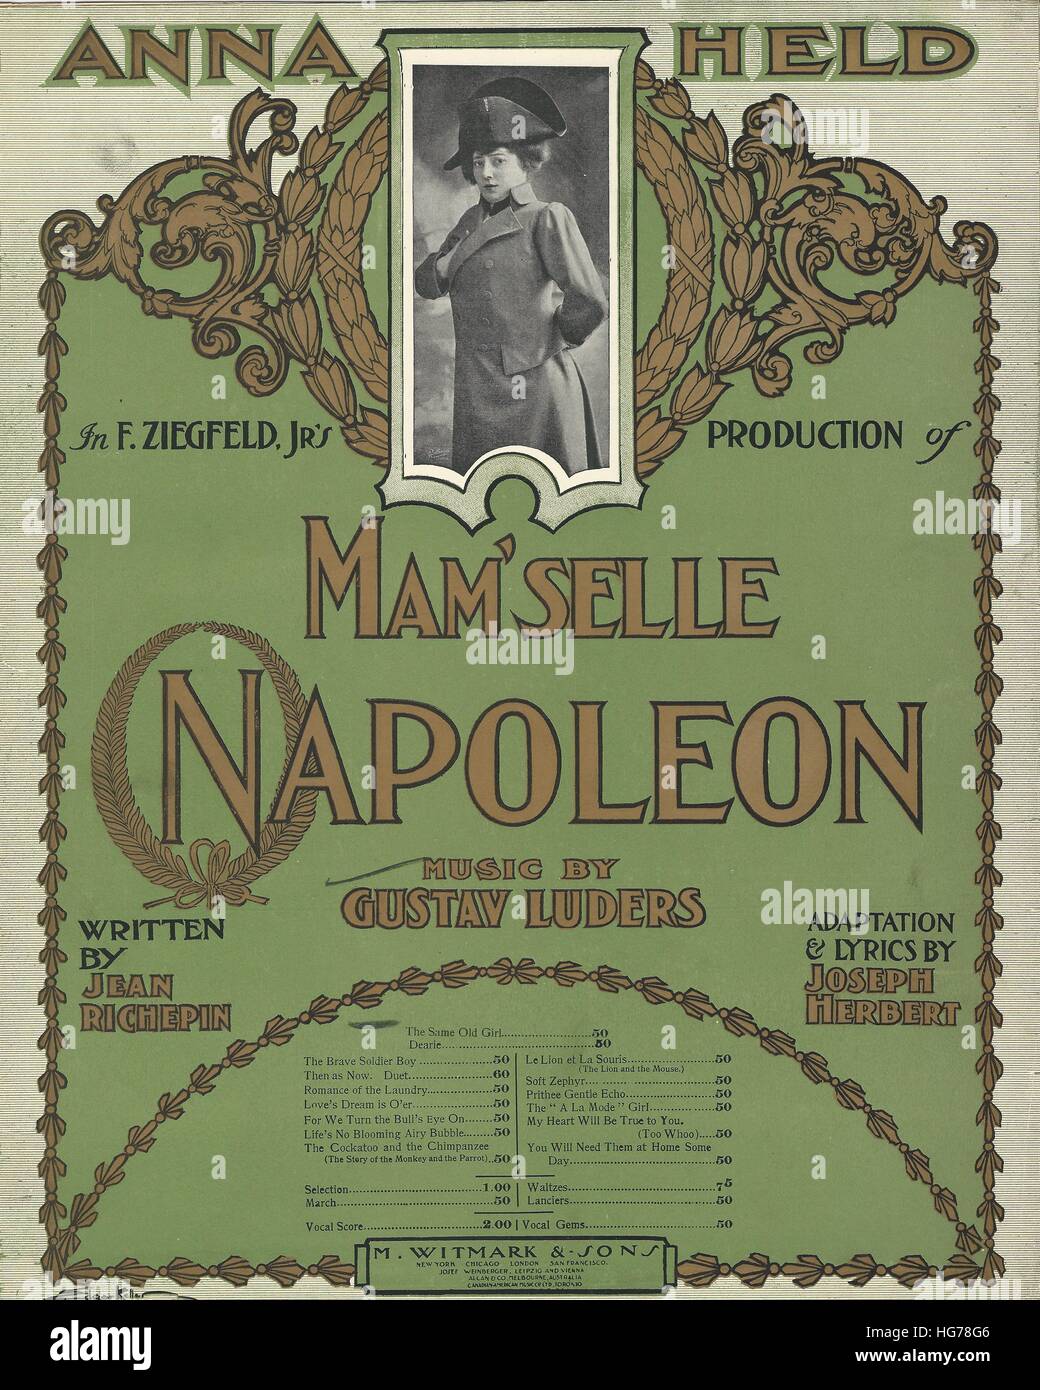 'Mam'selle Napoleon' 1903 Anna Held Ziegfeld Musical Sheet Music Cover Stock Photo